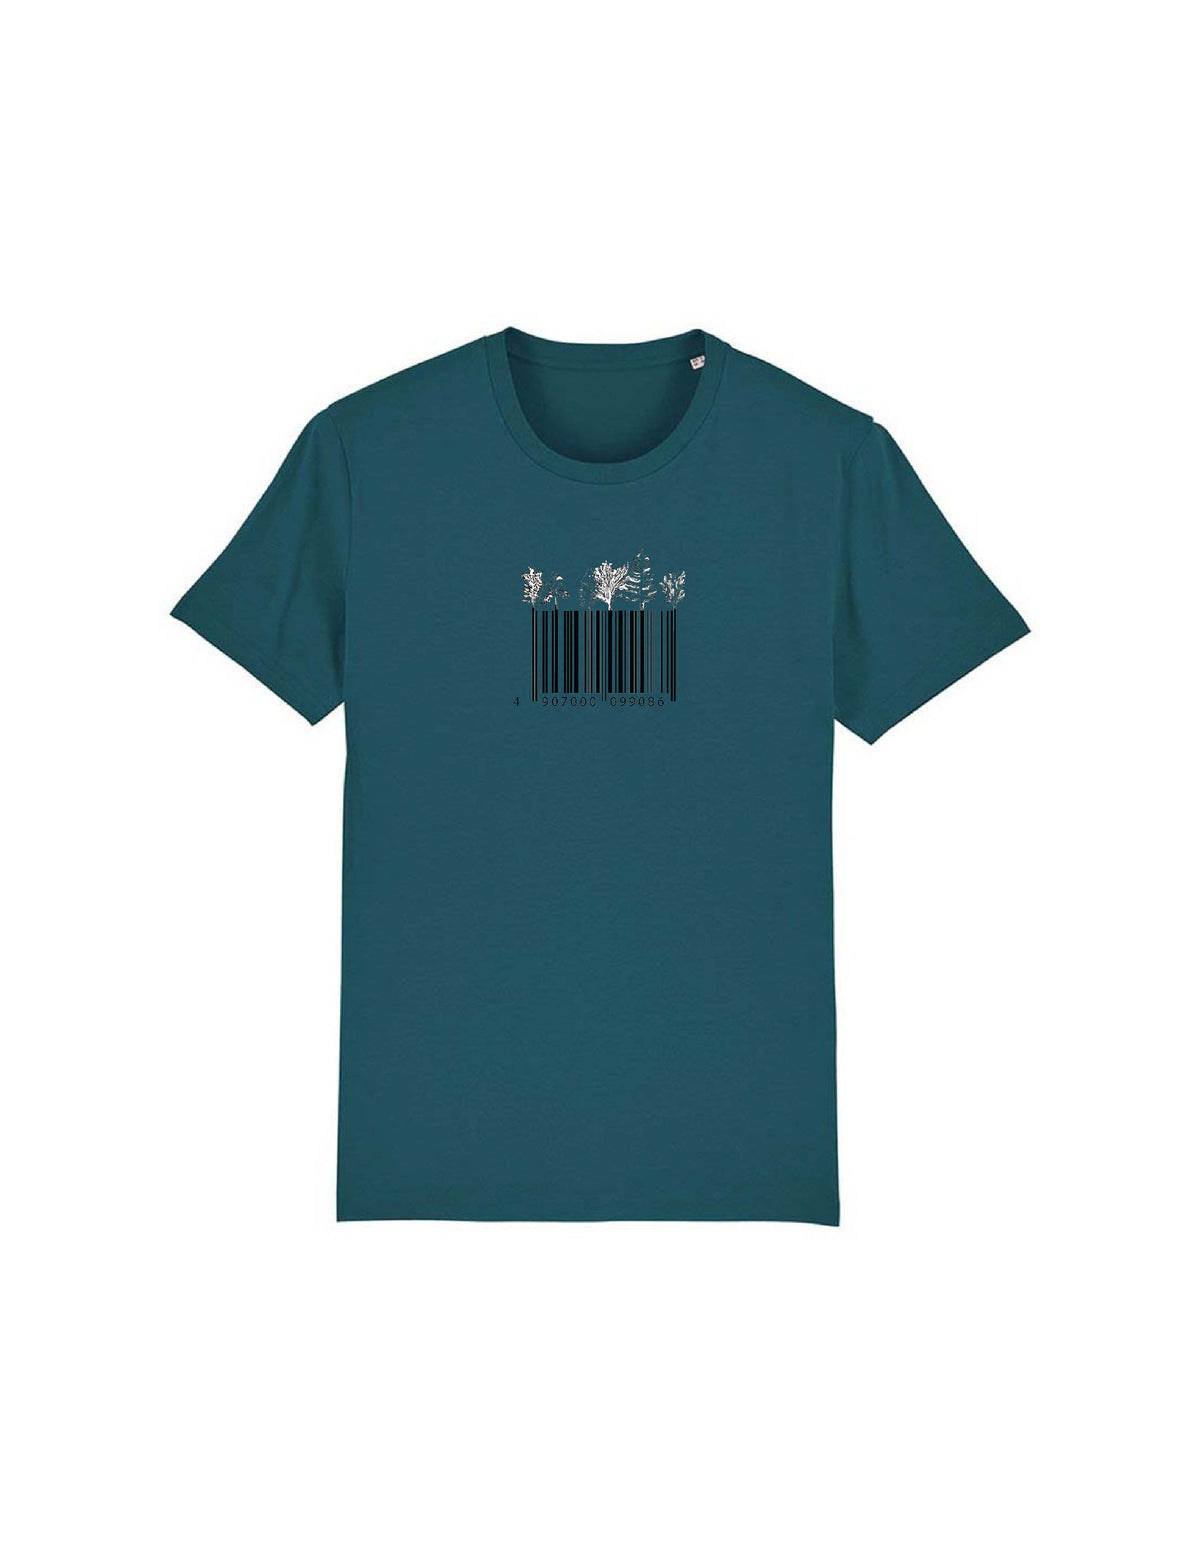 Deforestation - Unisex Relaxed Organic Cotton T-Shirt - Limited Colours M - XXXL